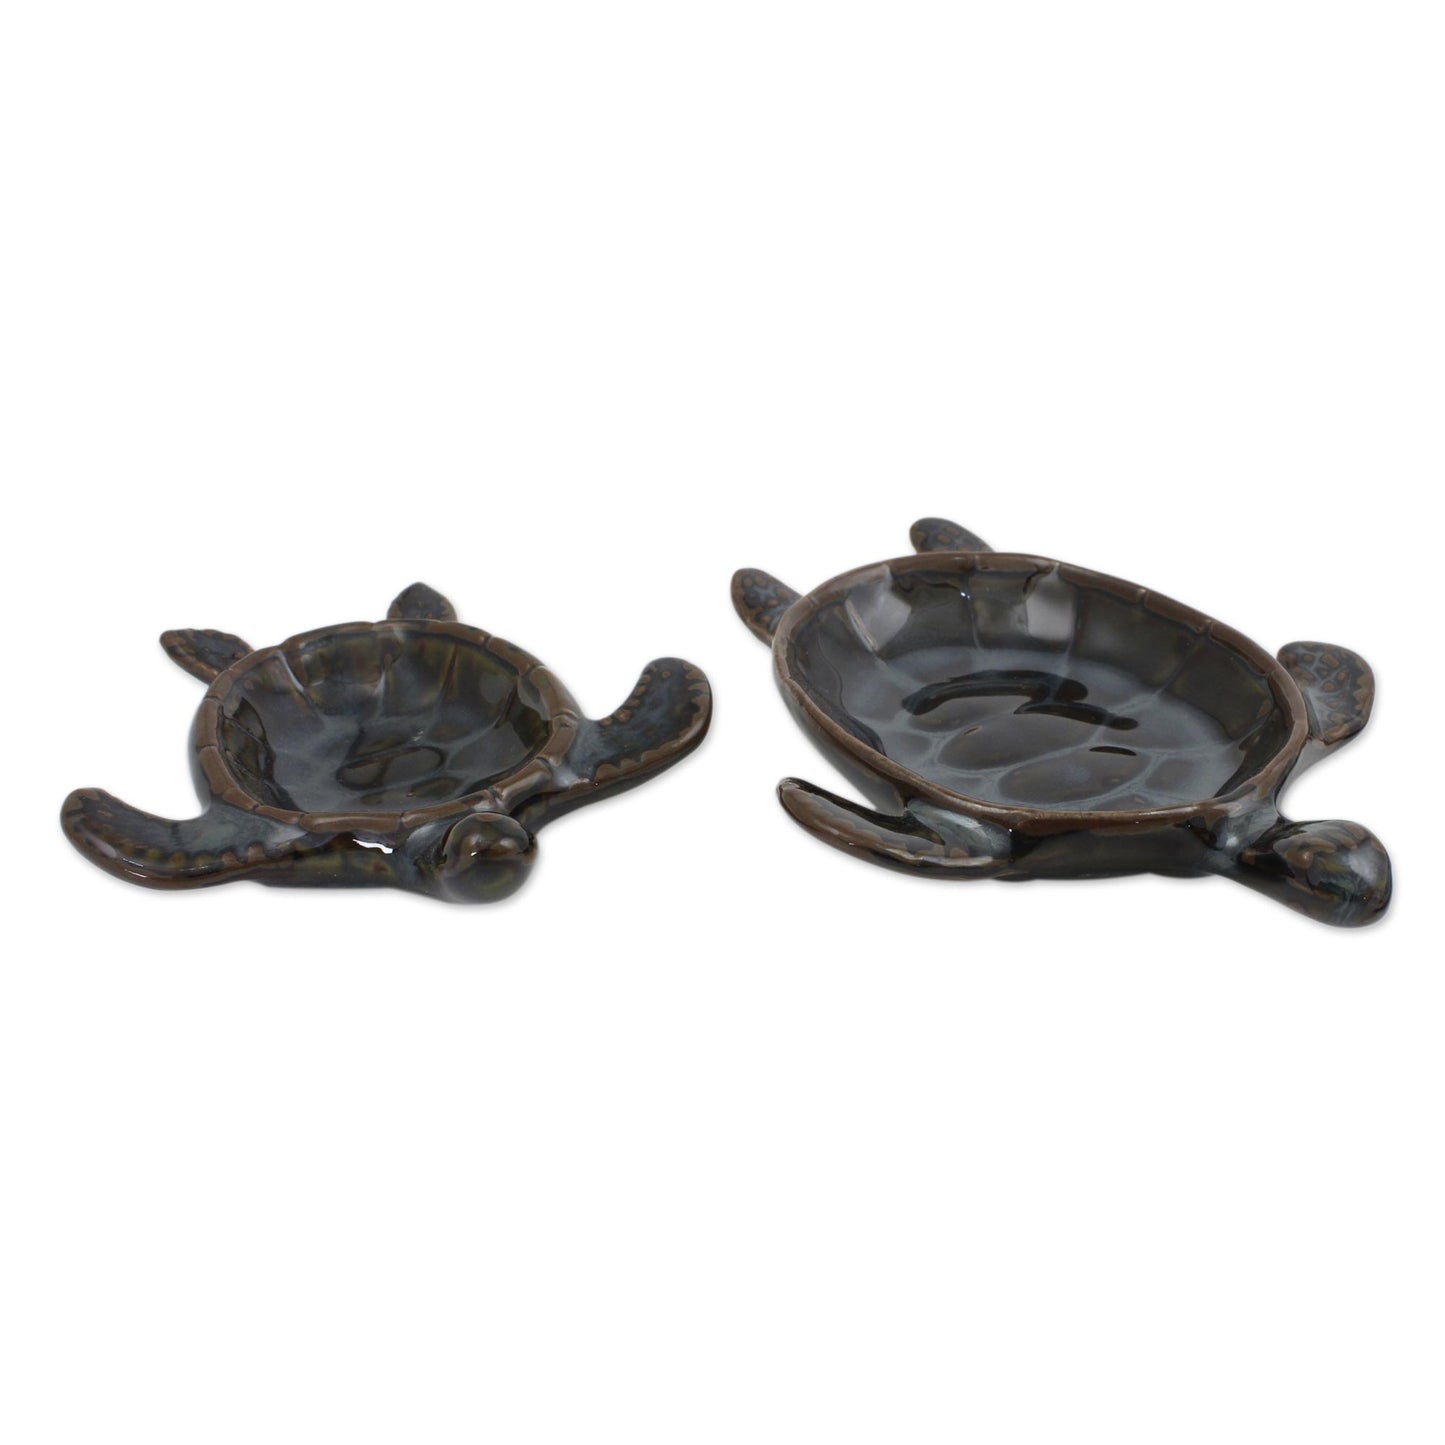 Indigo Thai Turtles Handcrafted Ceramic Bowls from Thailand (pair)